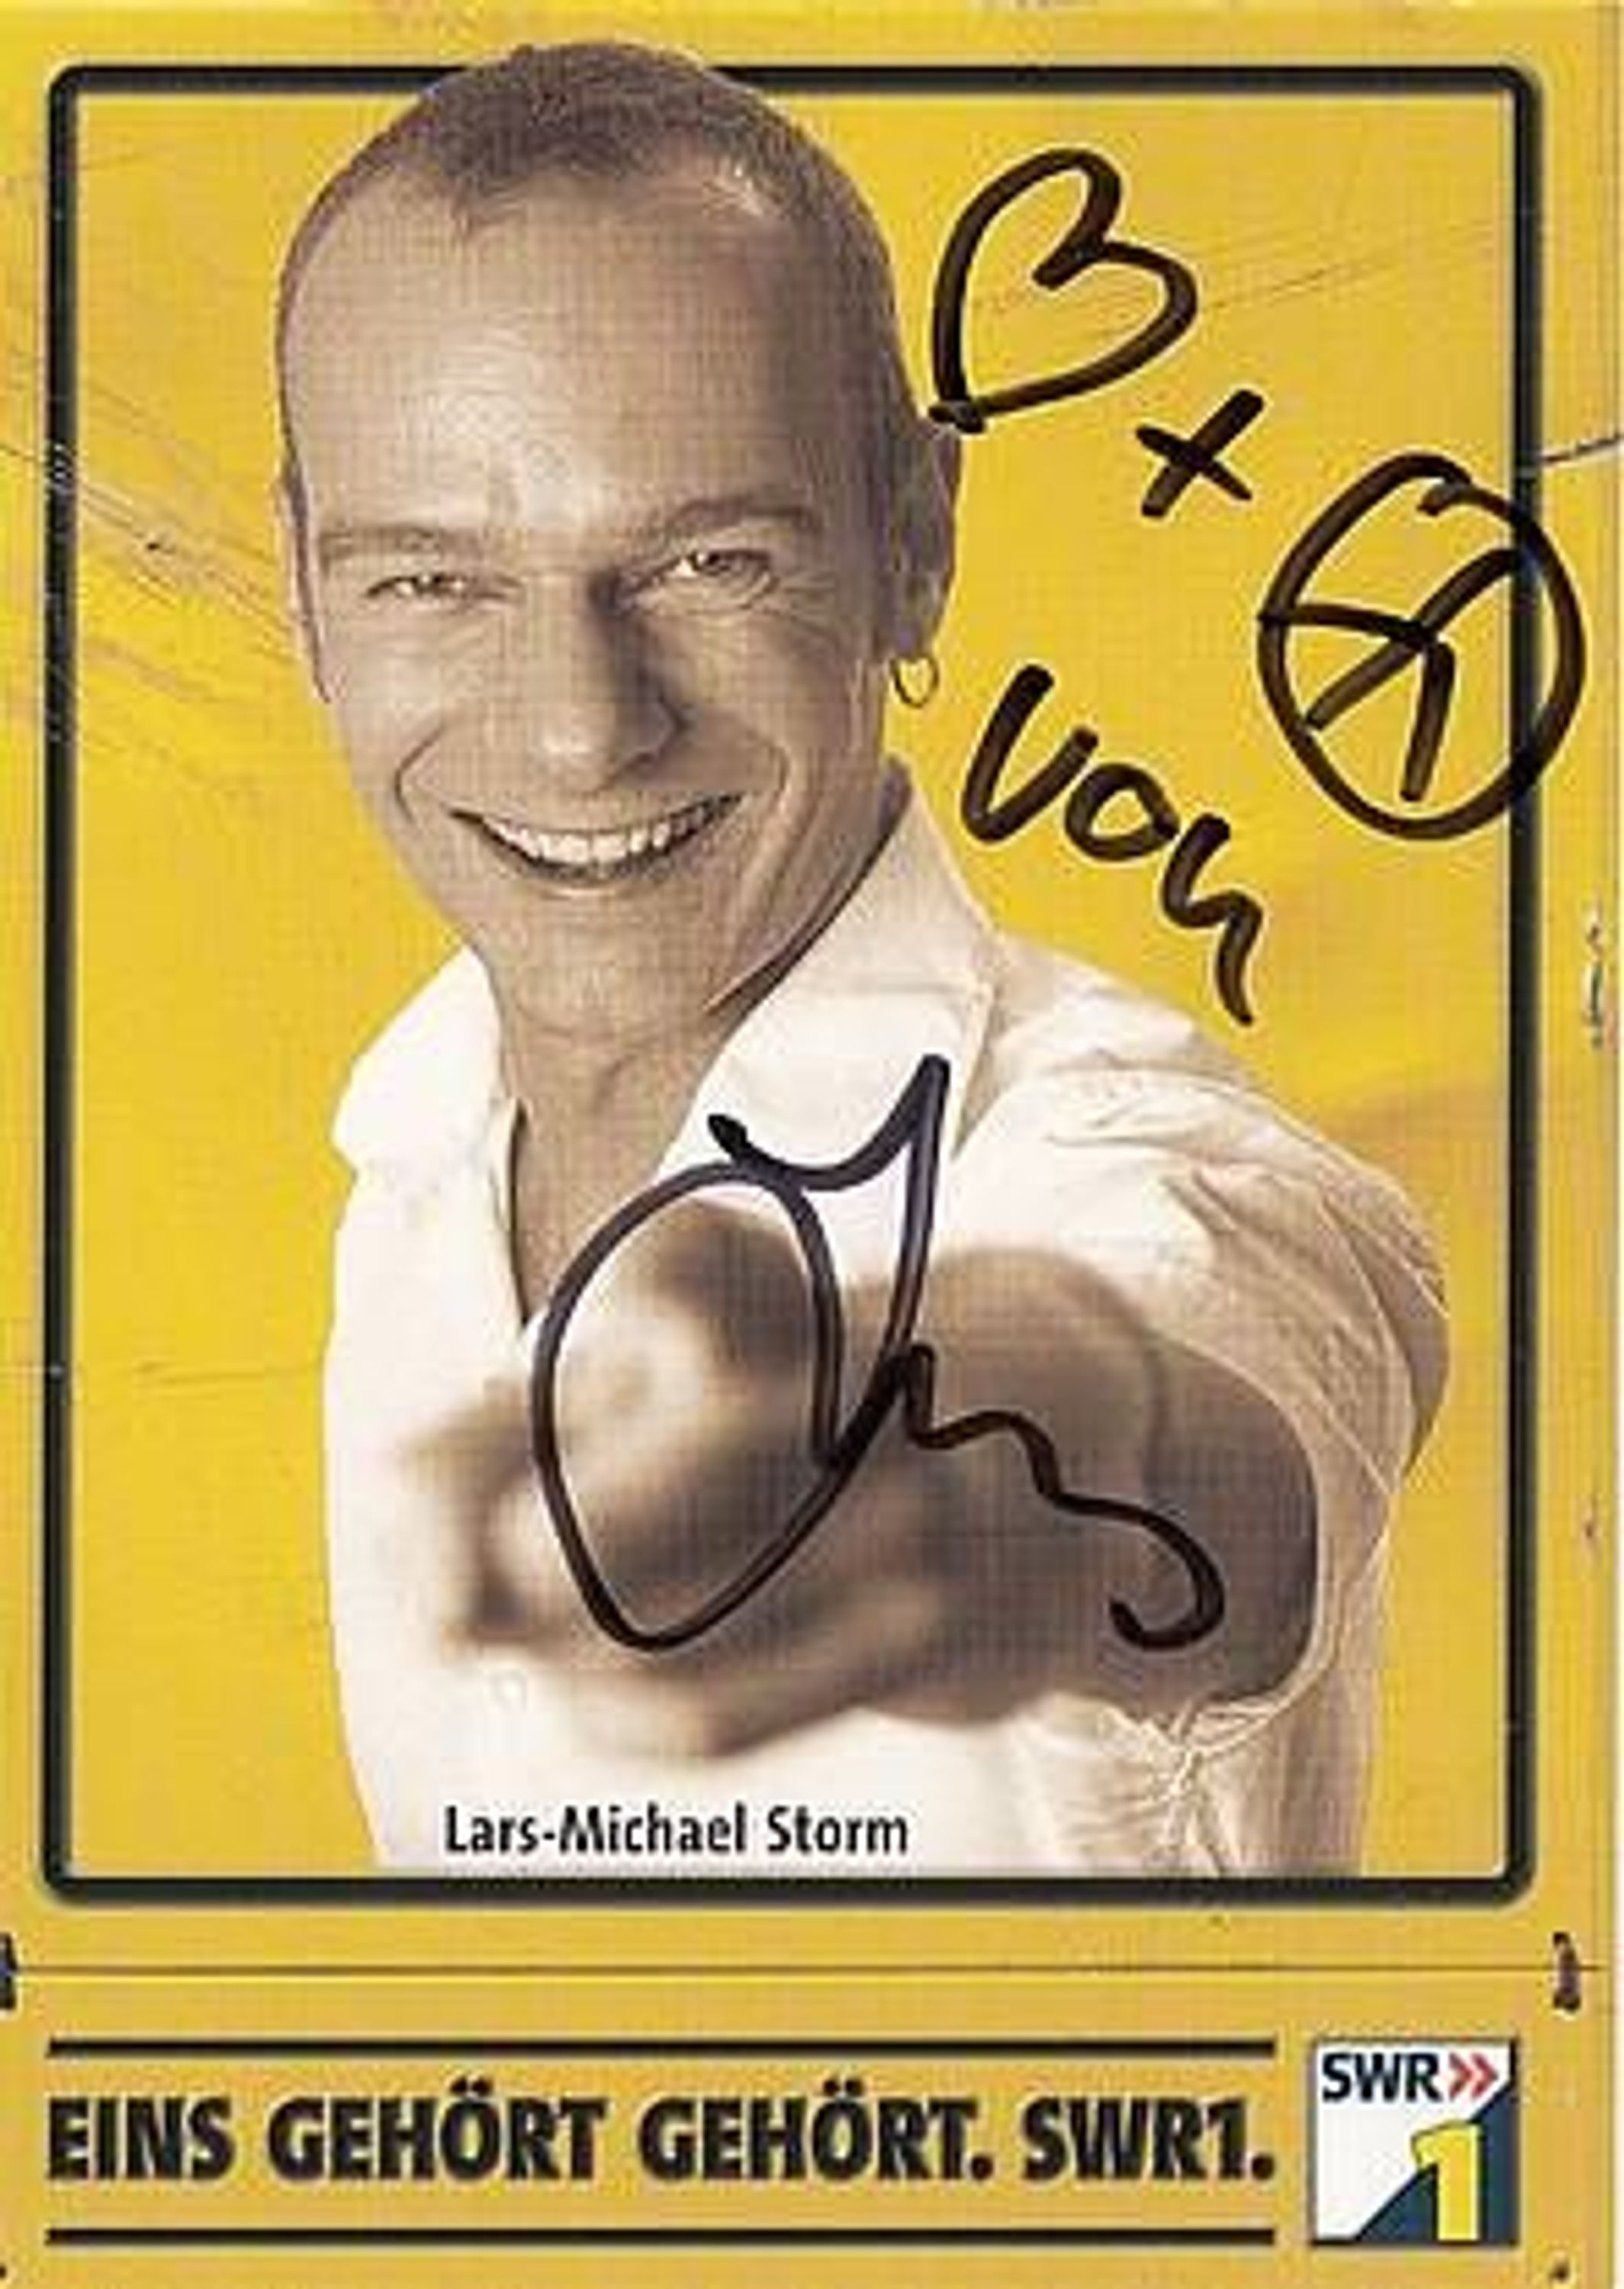 Lars-Michael Storm Autogrammkarte Original Signiert + 54825 gebraucht kaufen ...